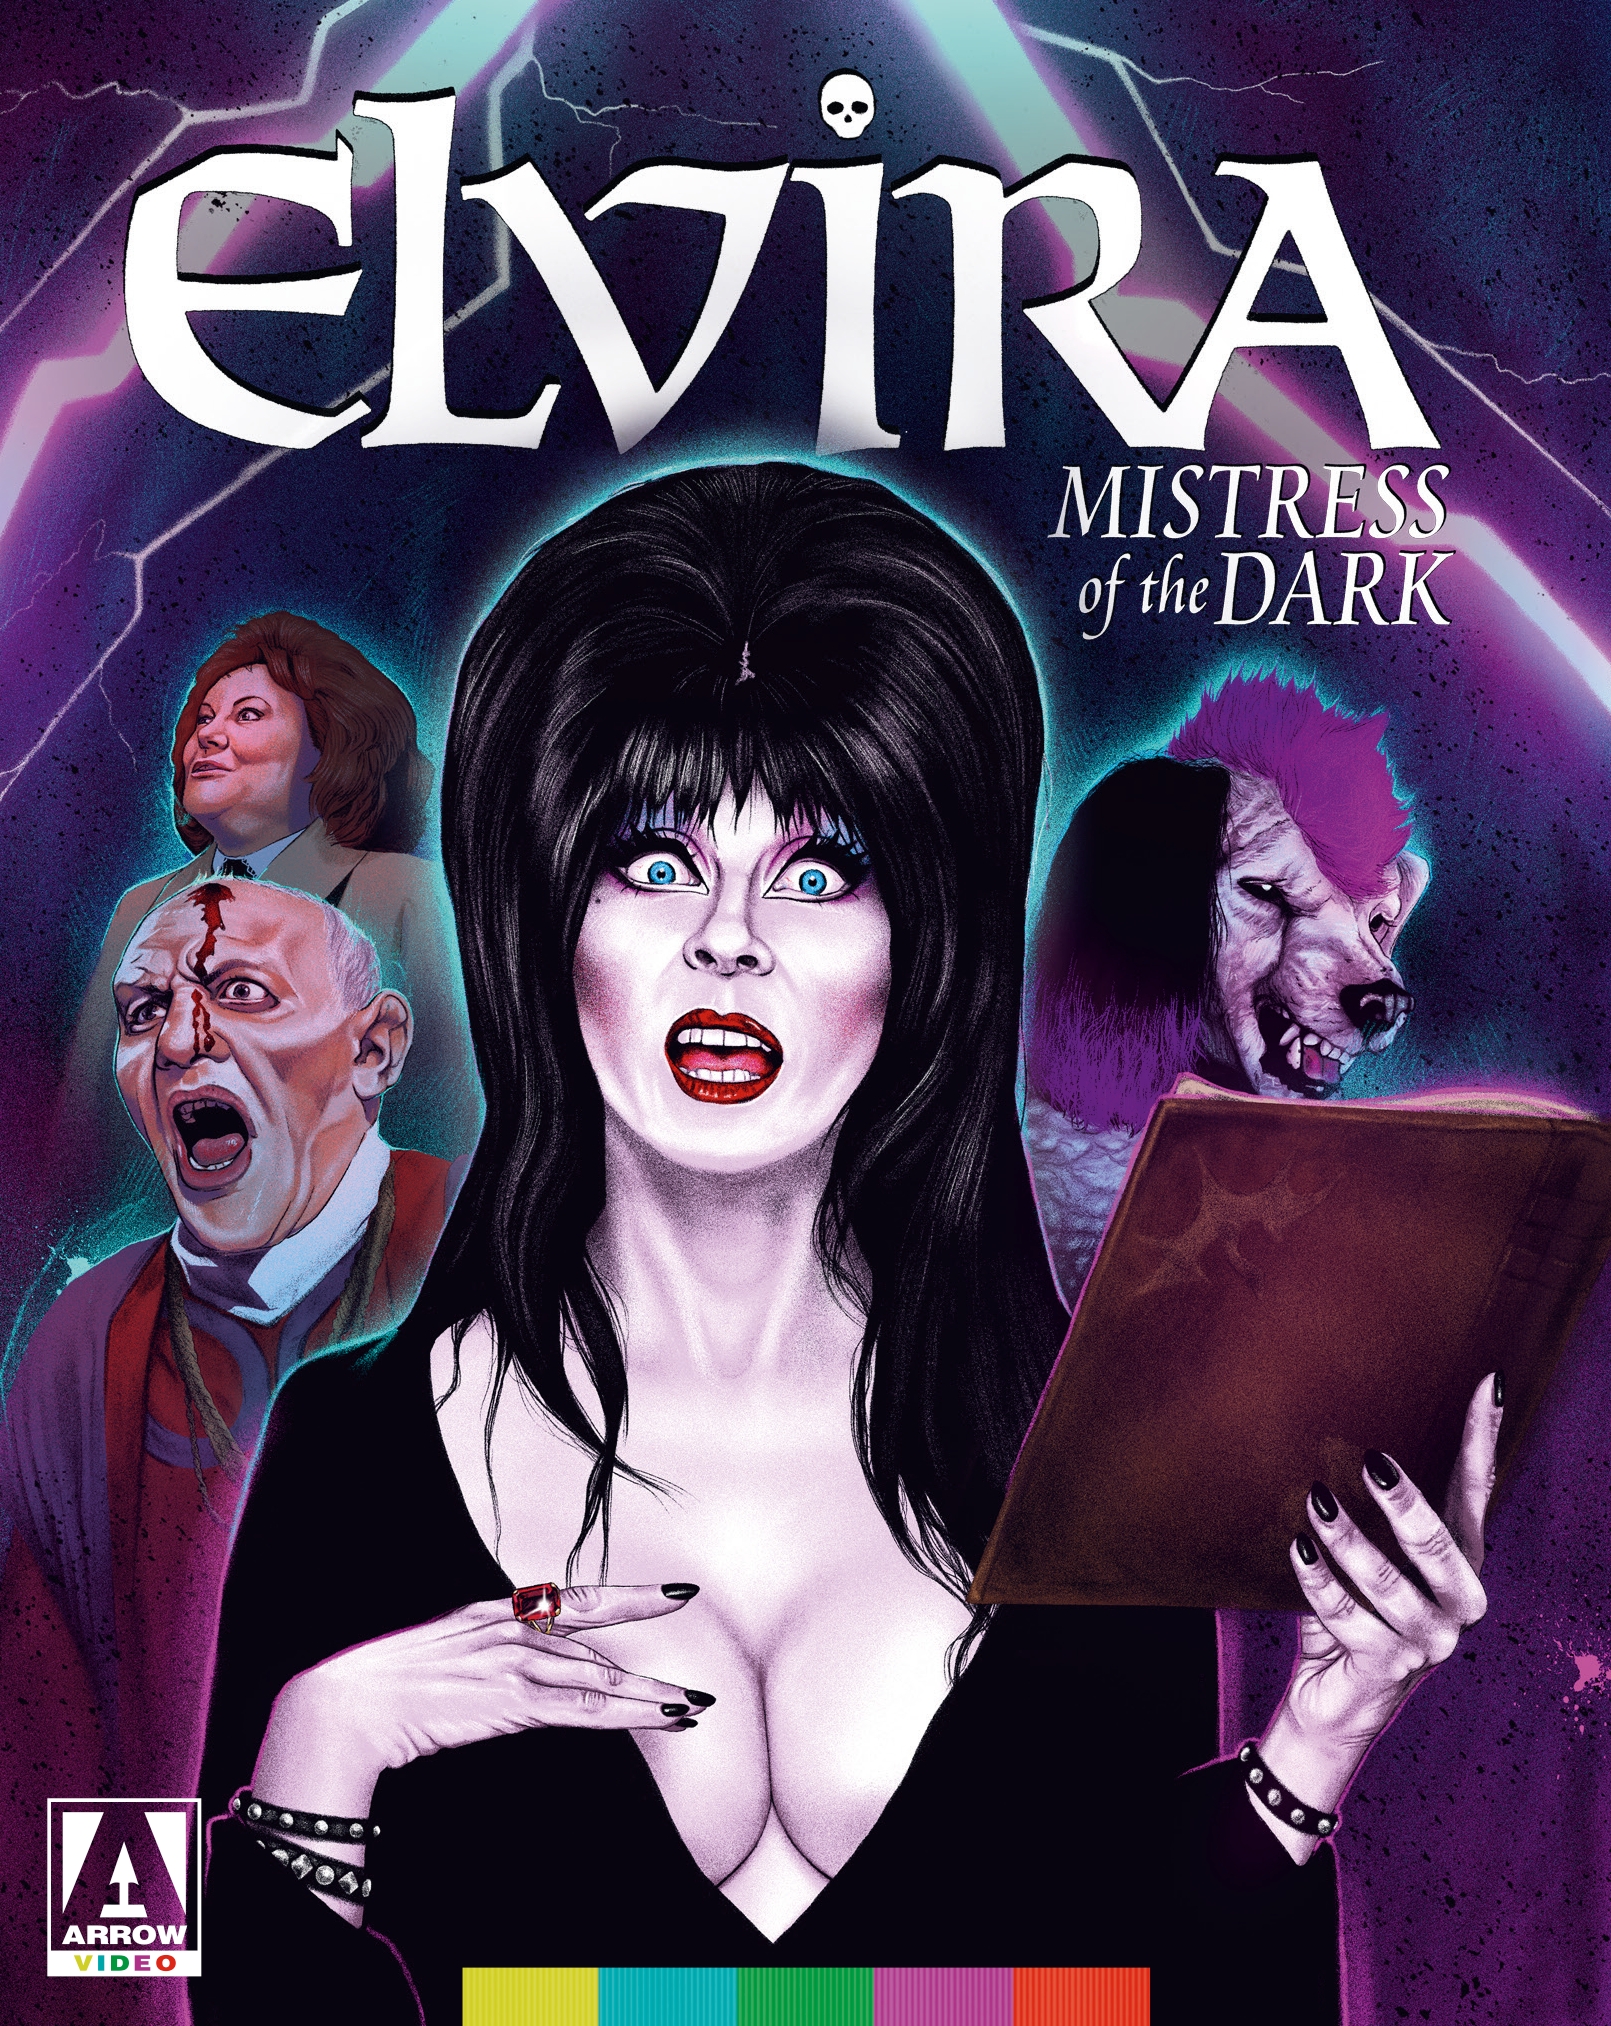 Elvira Mistress of the Dark Movie Poster 24x36 Inches